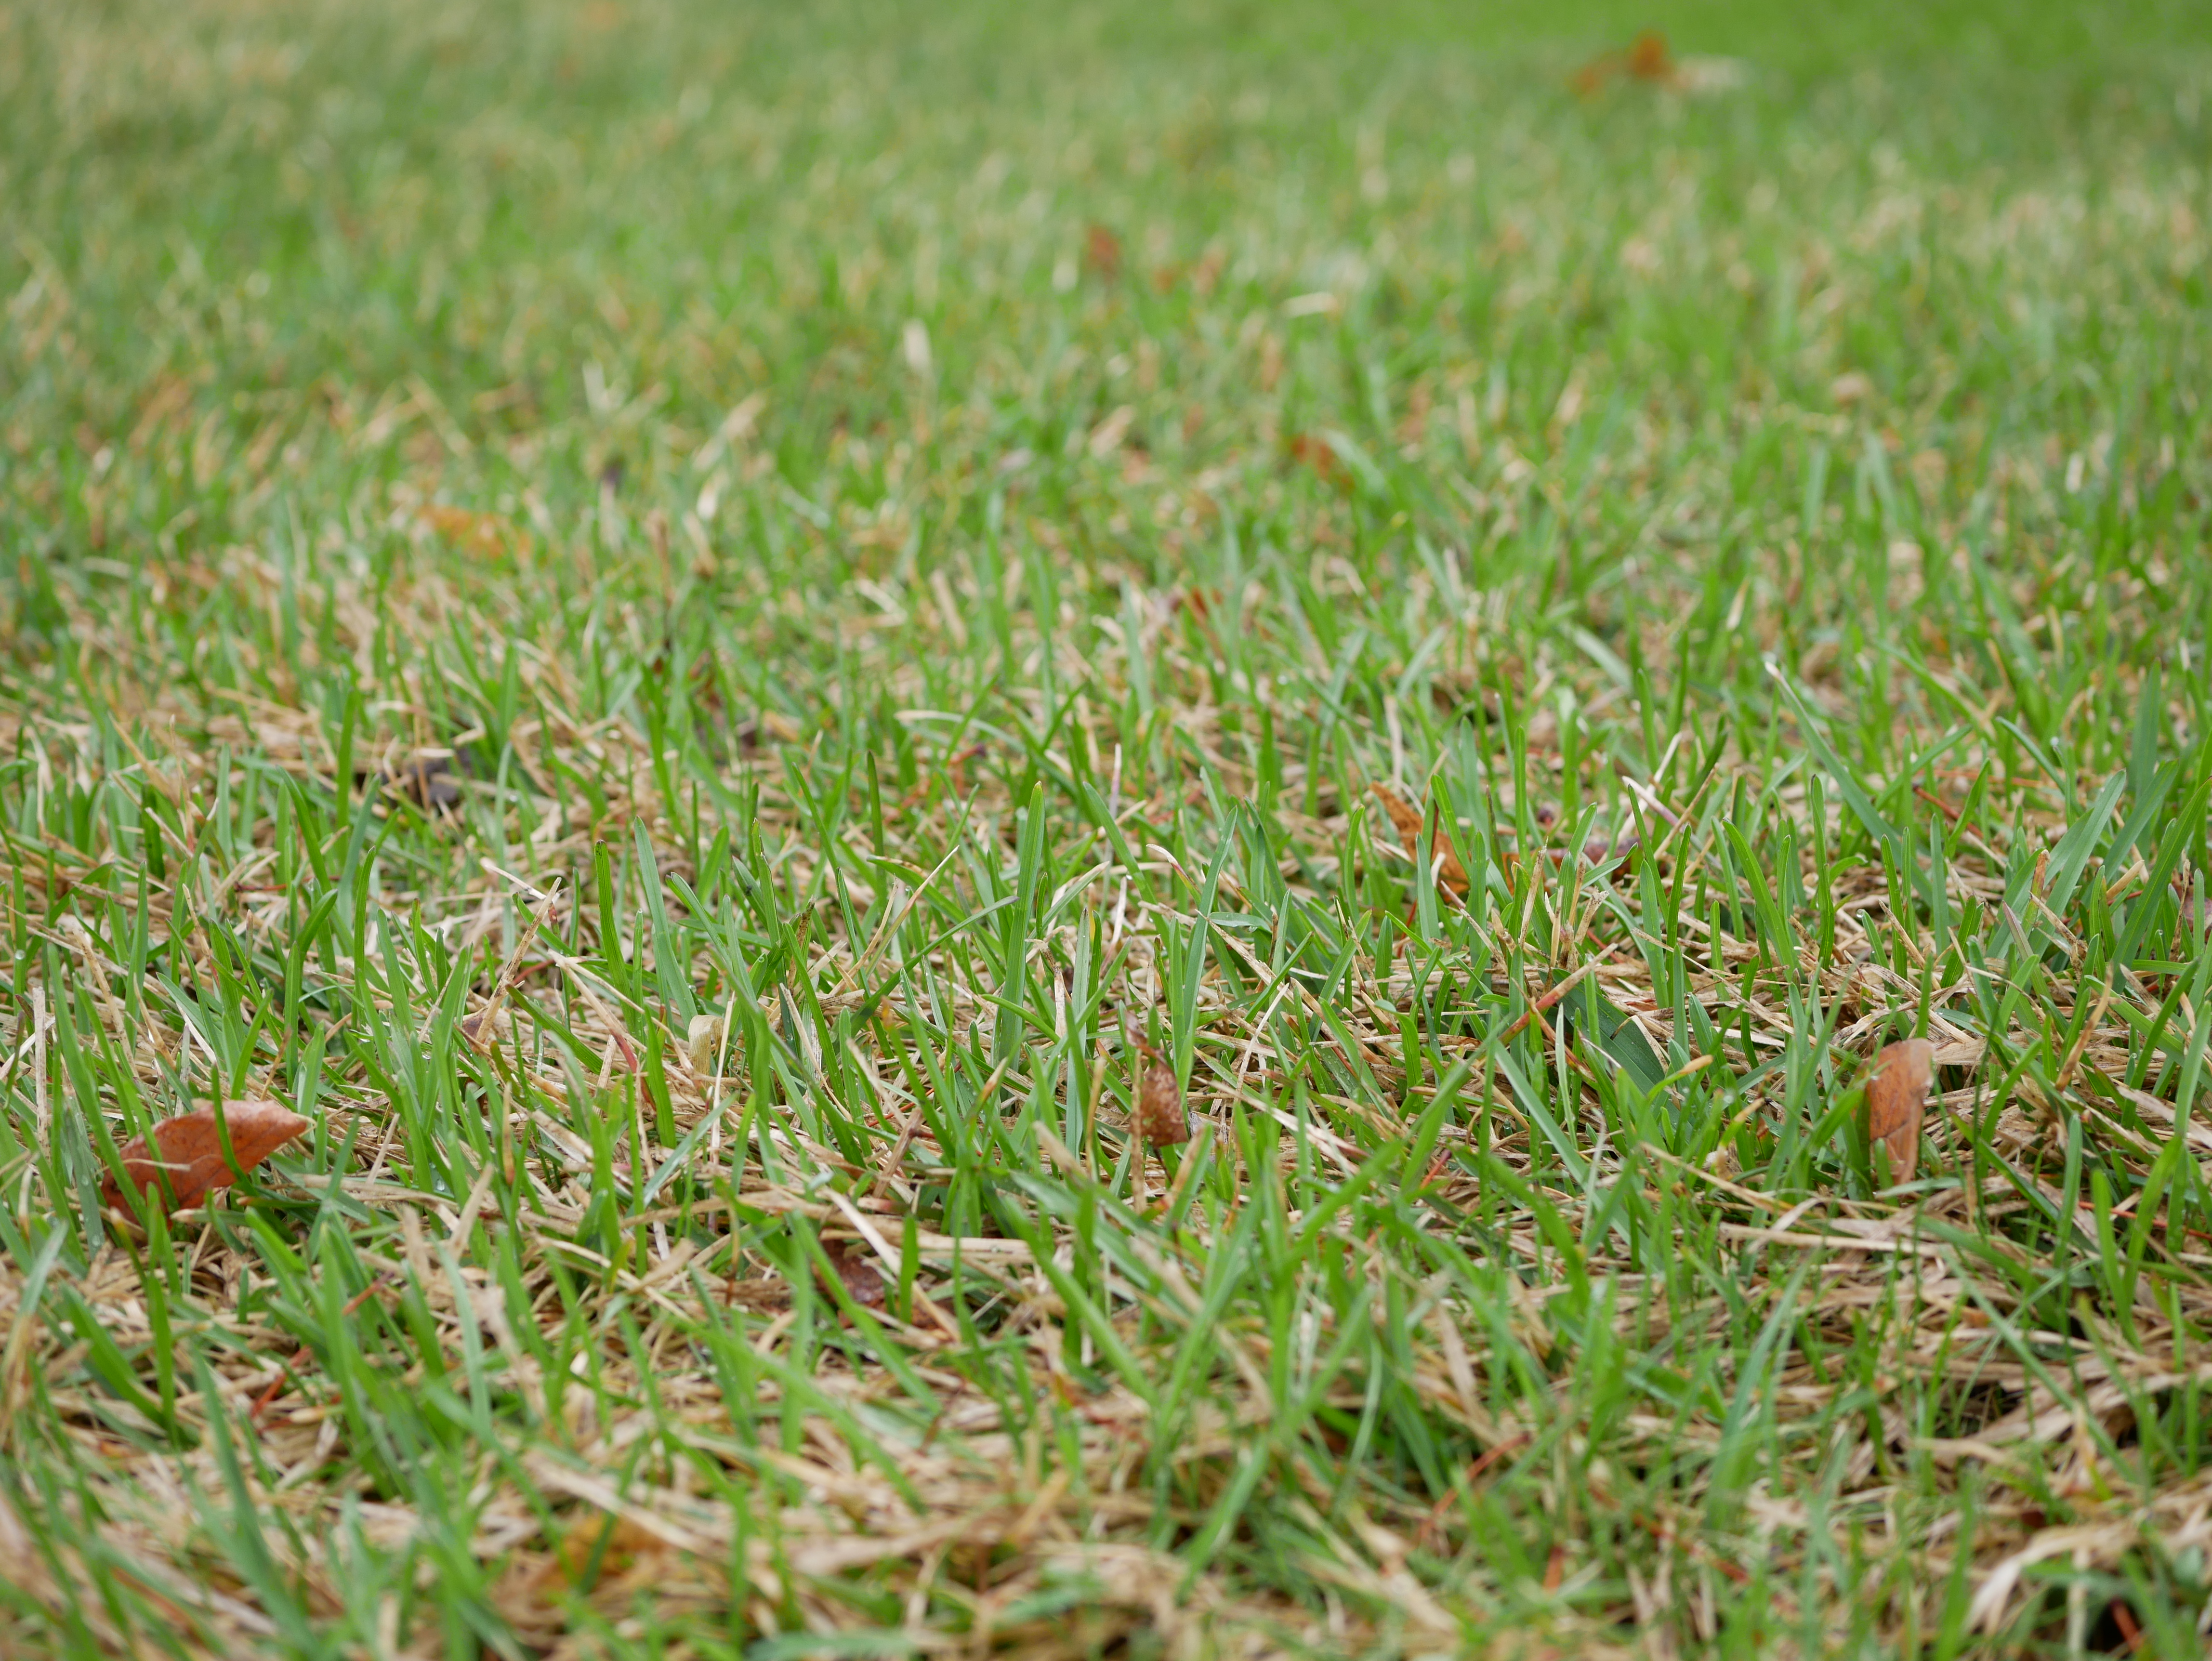 District office_2019Apr22_Close up of green grass landscape.JPG